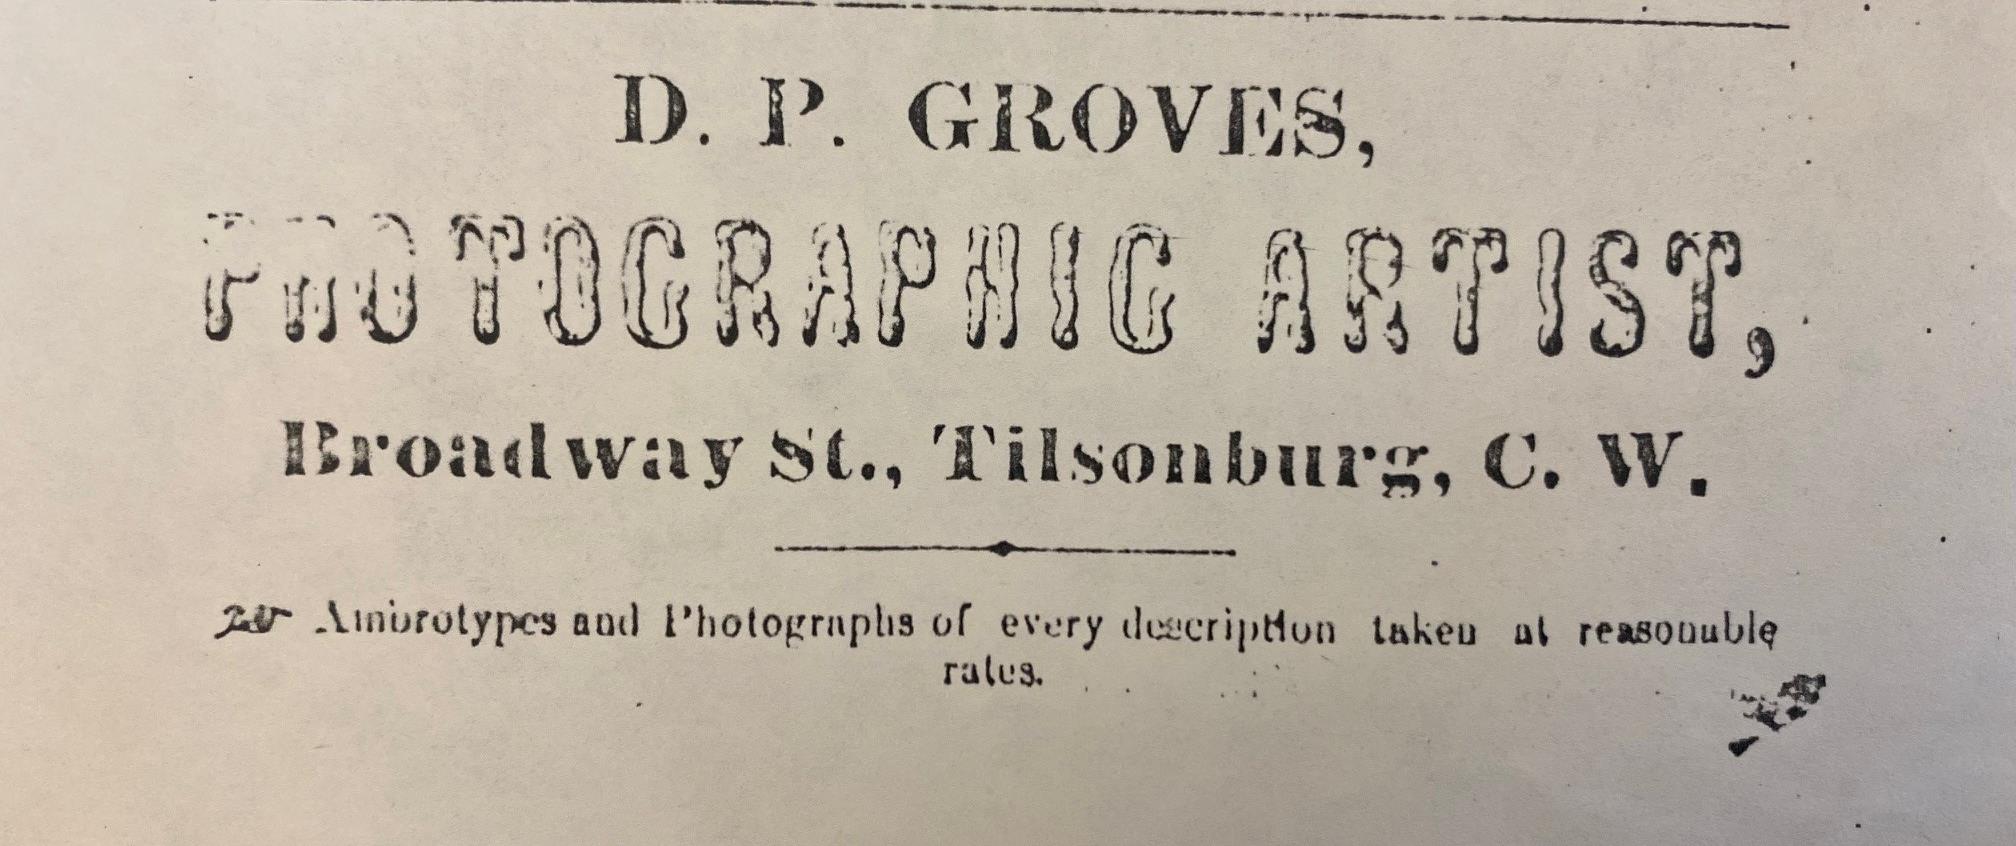 Advertisement for D.P. Groves photography, Broadway Street, Tillsonburg. 